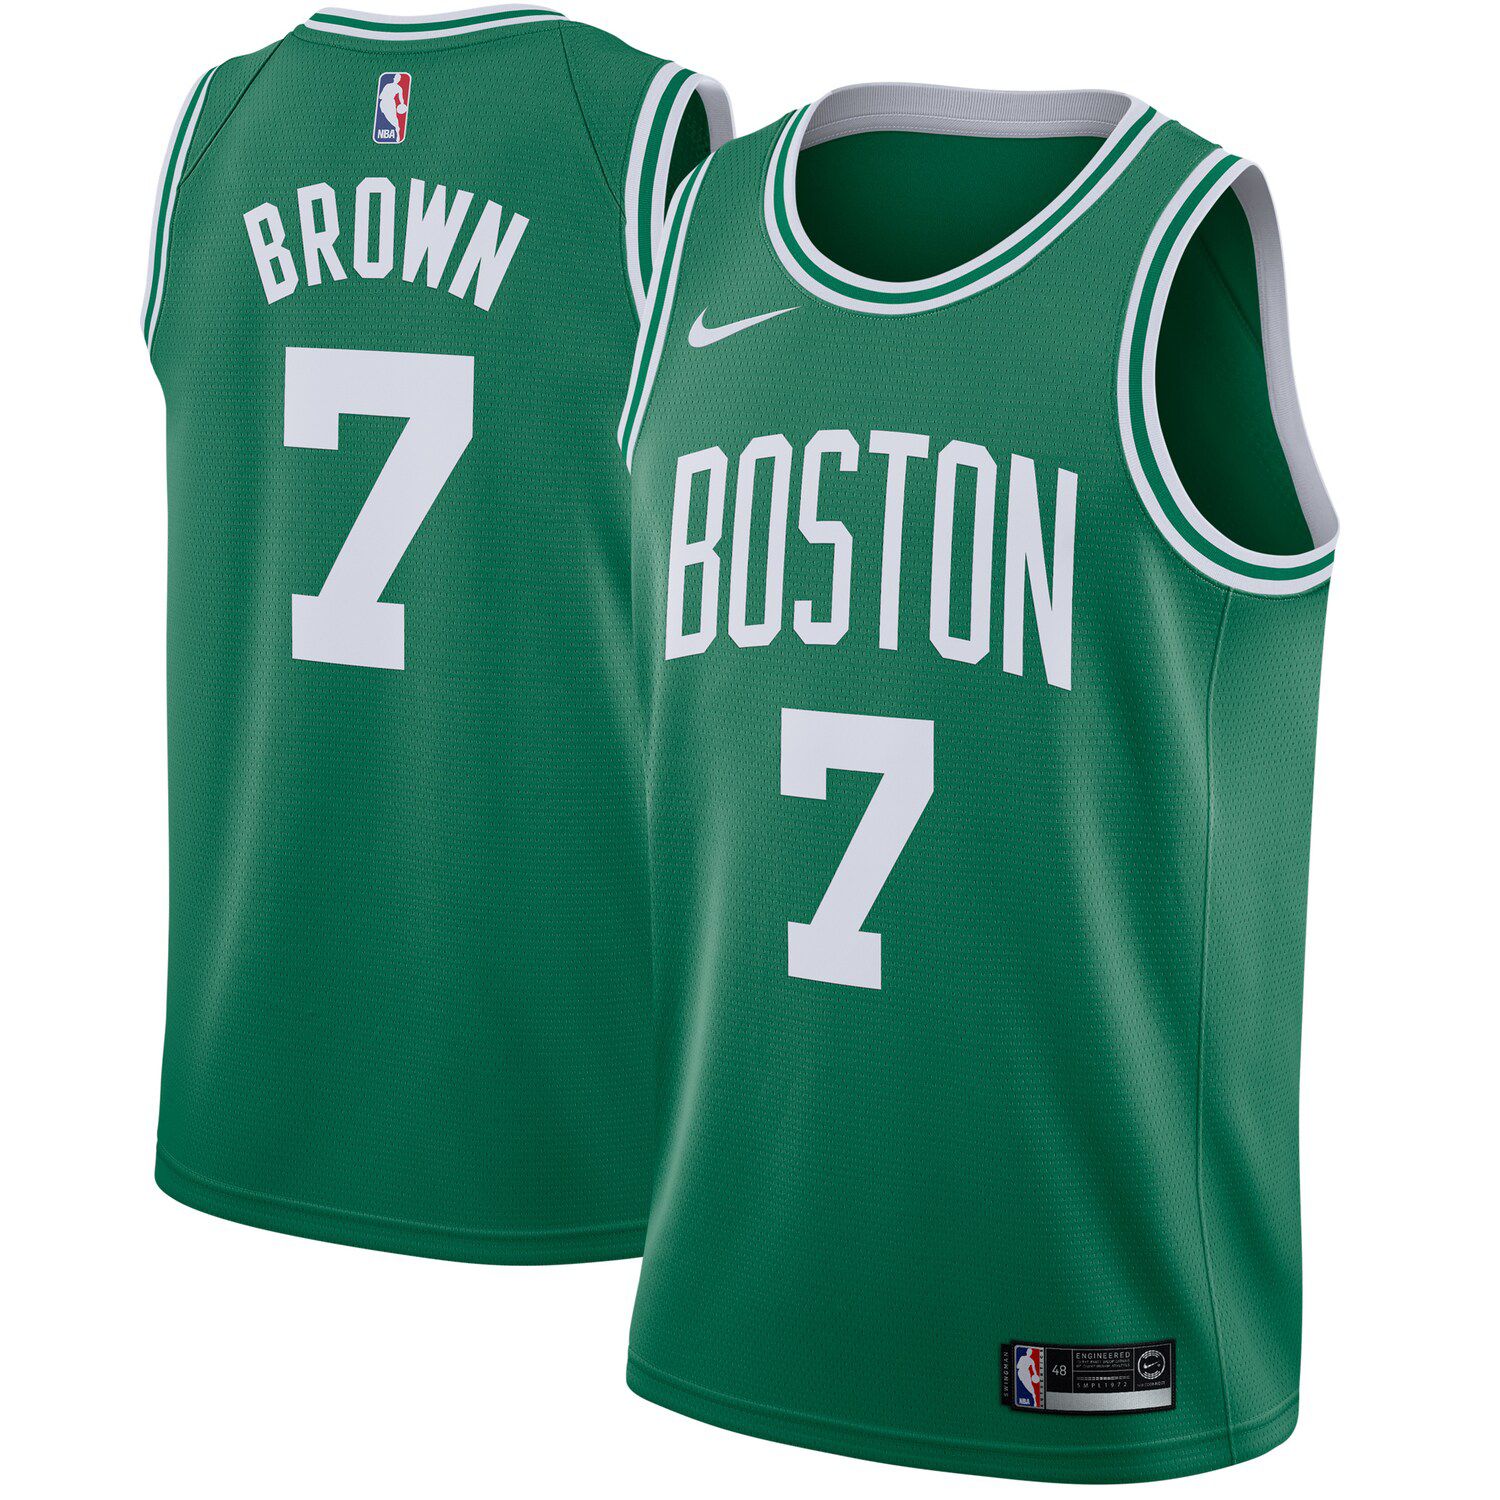 Boston Celtics Swingman Jersey 